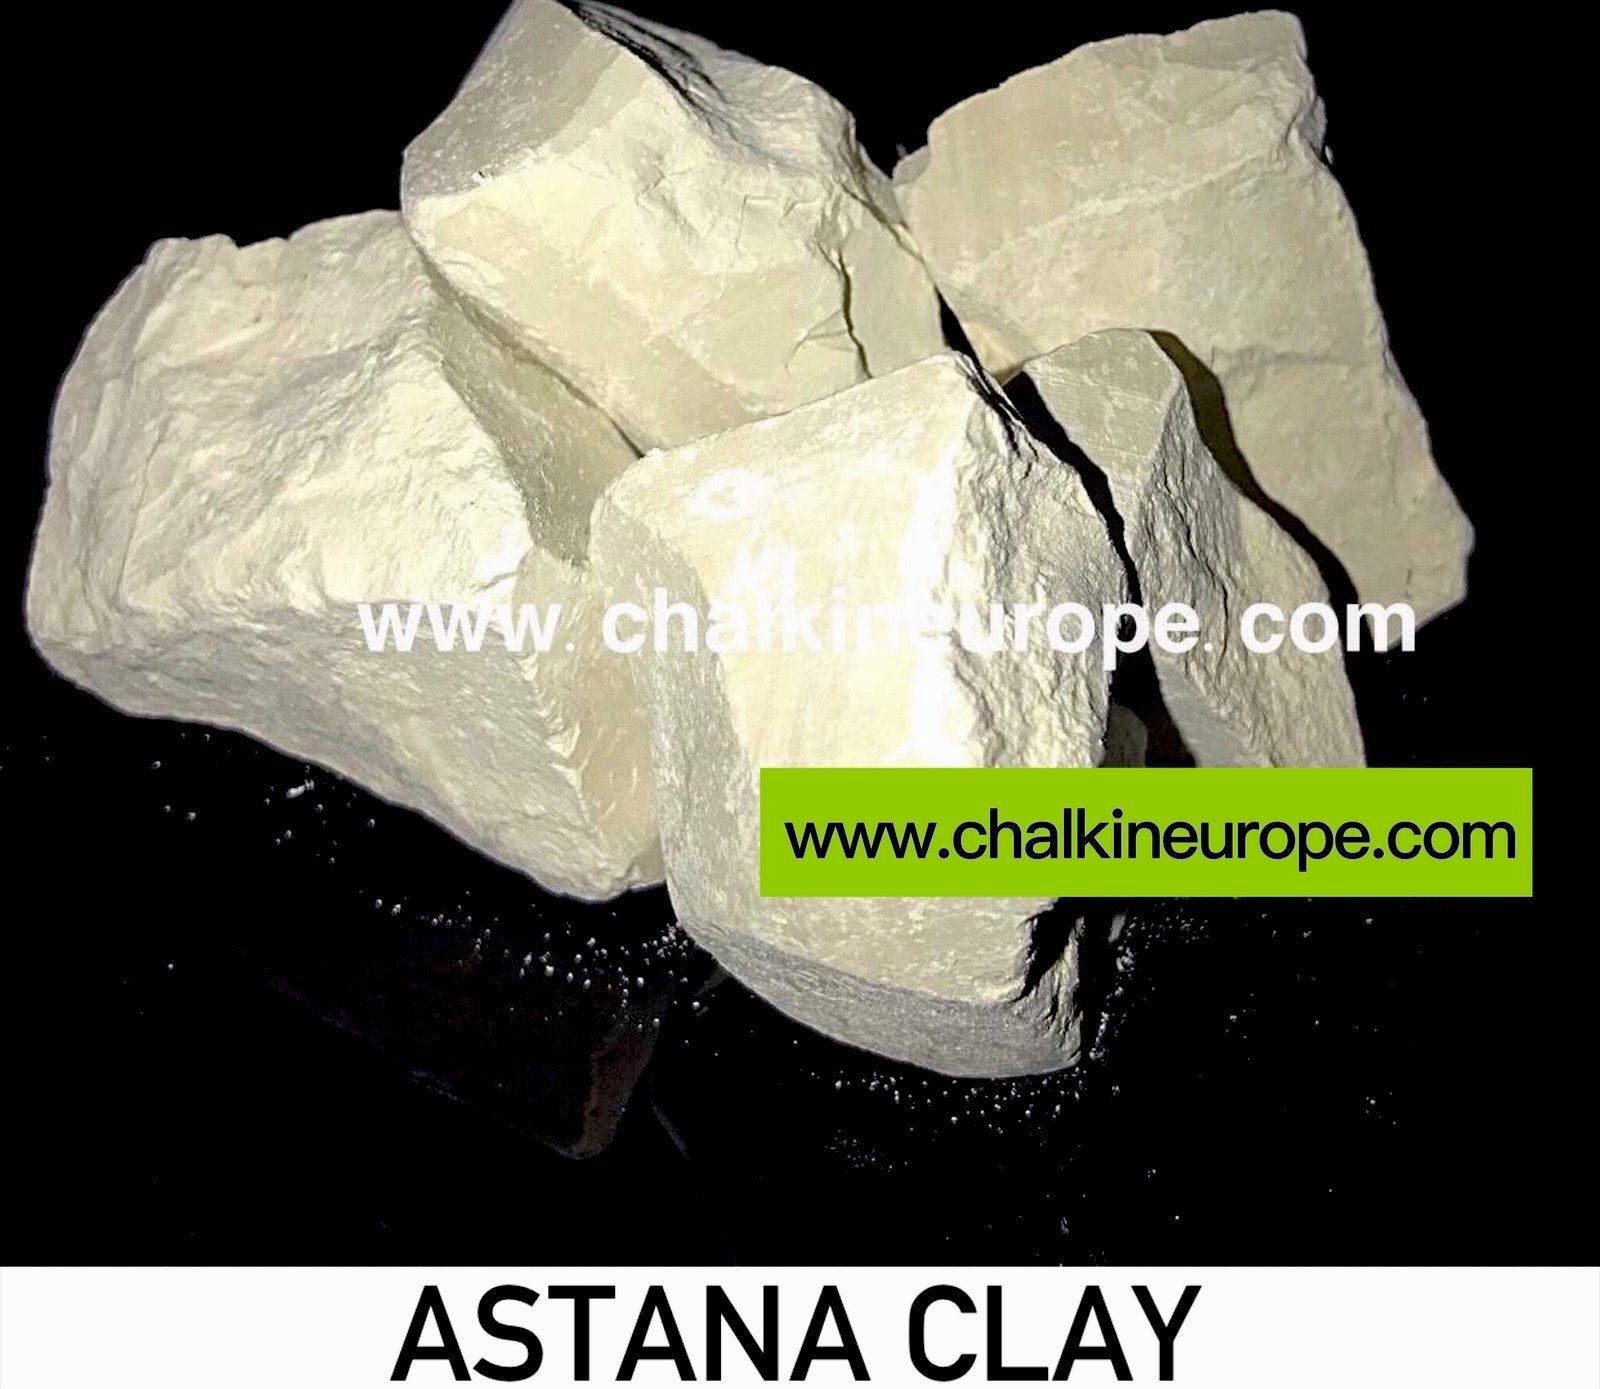 Astana Clay - ChalkinEuropa